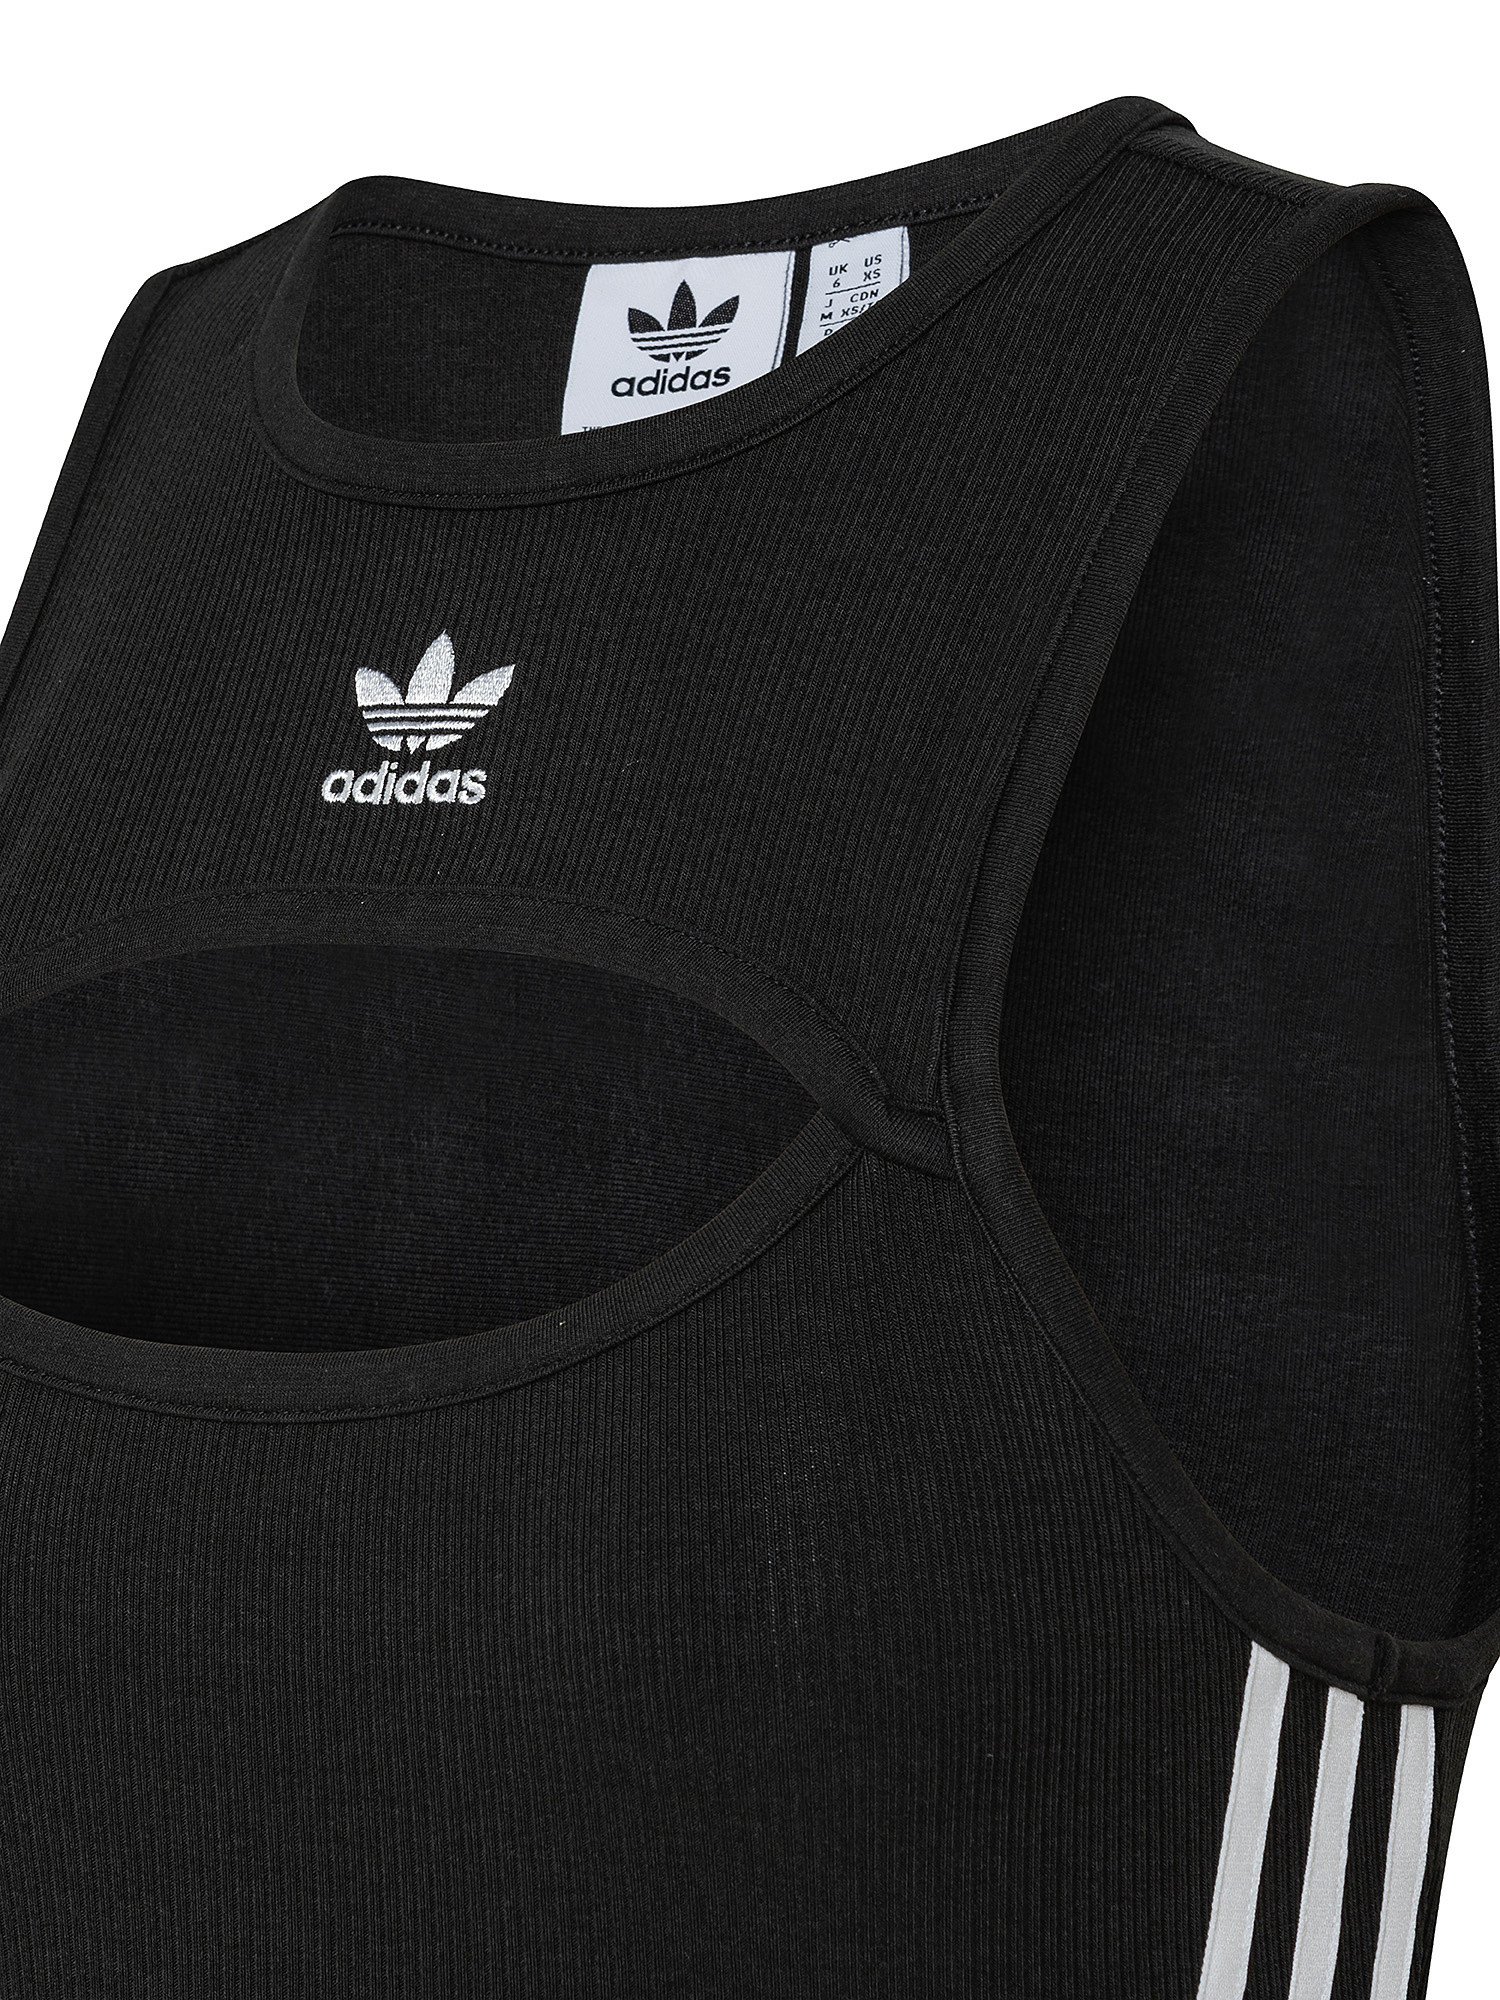 Adidas - Top adicolor, Black, large image number 2